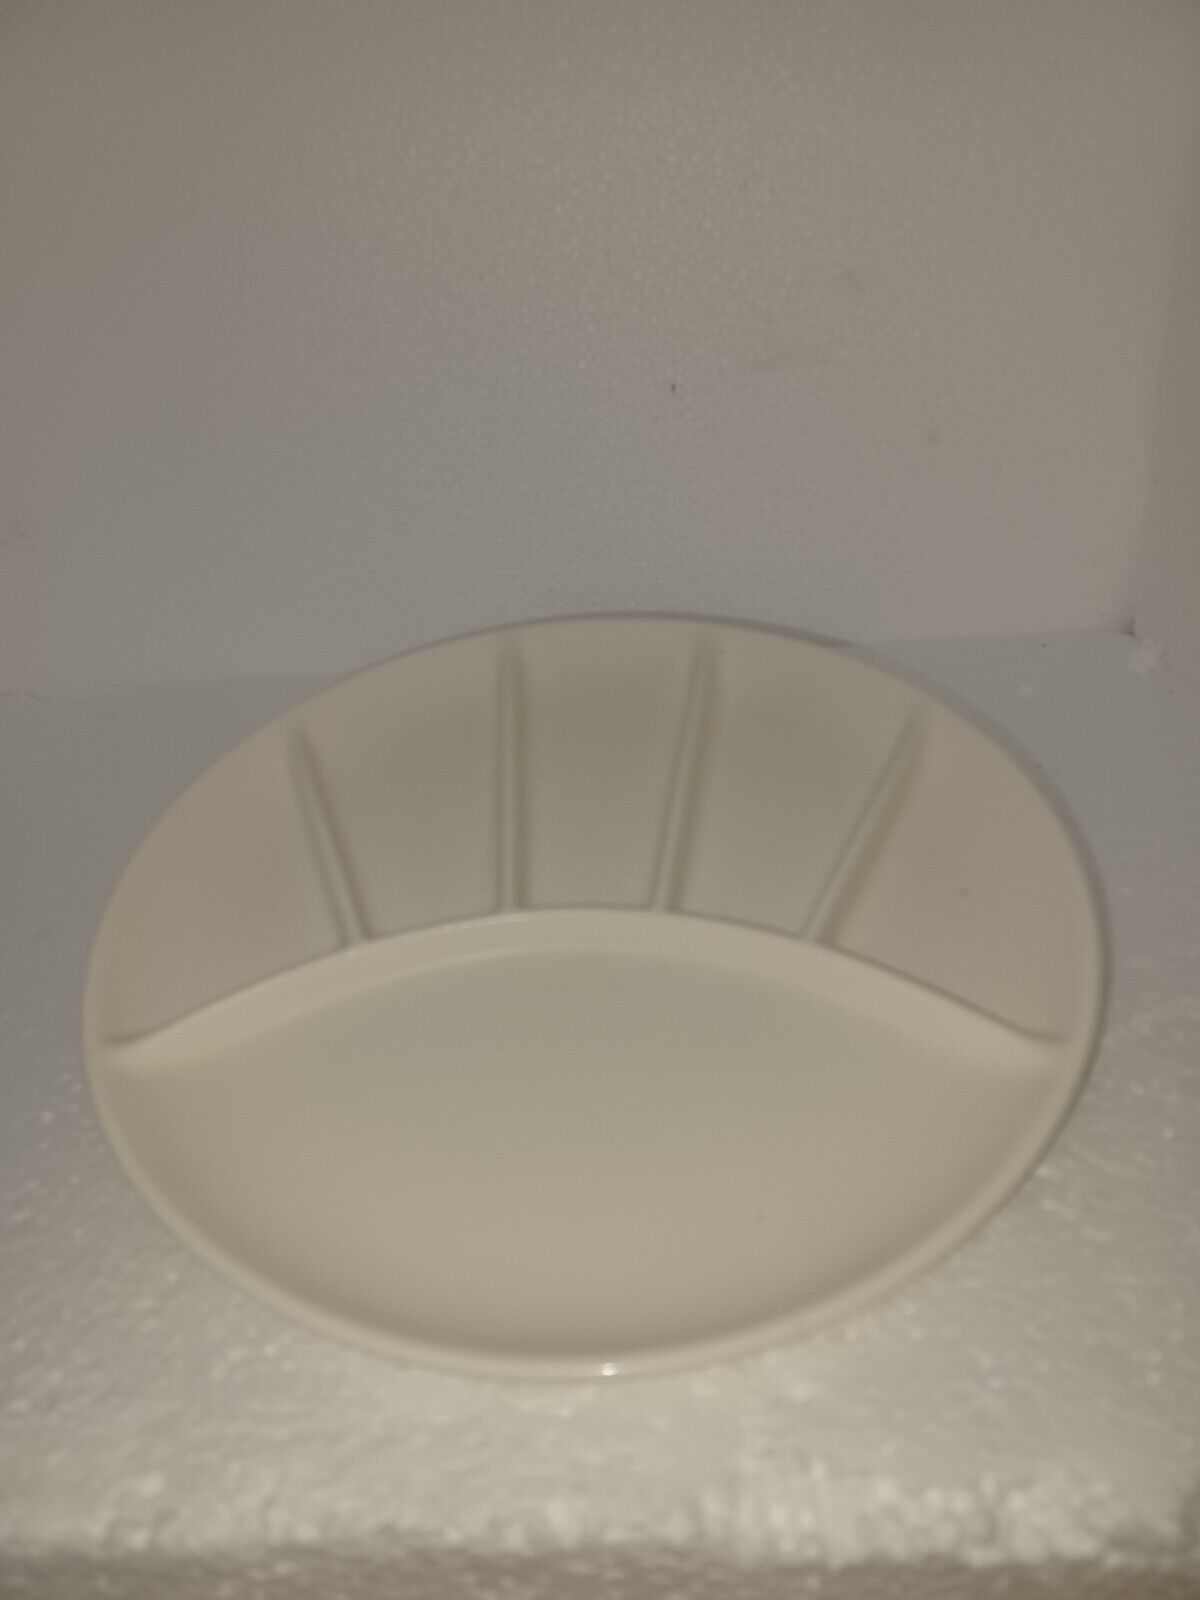 4 pc VTG Divided Japanese Sushi Plates Off White/Cream Ceramic in original box